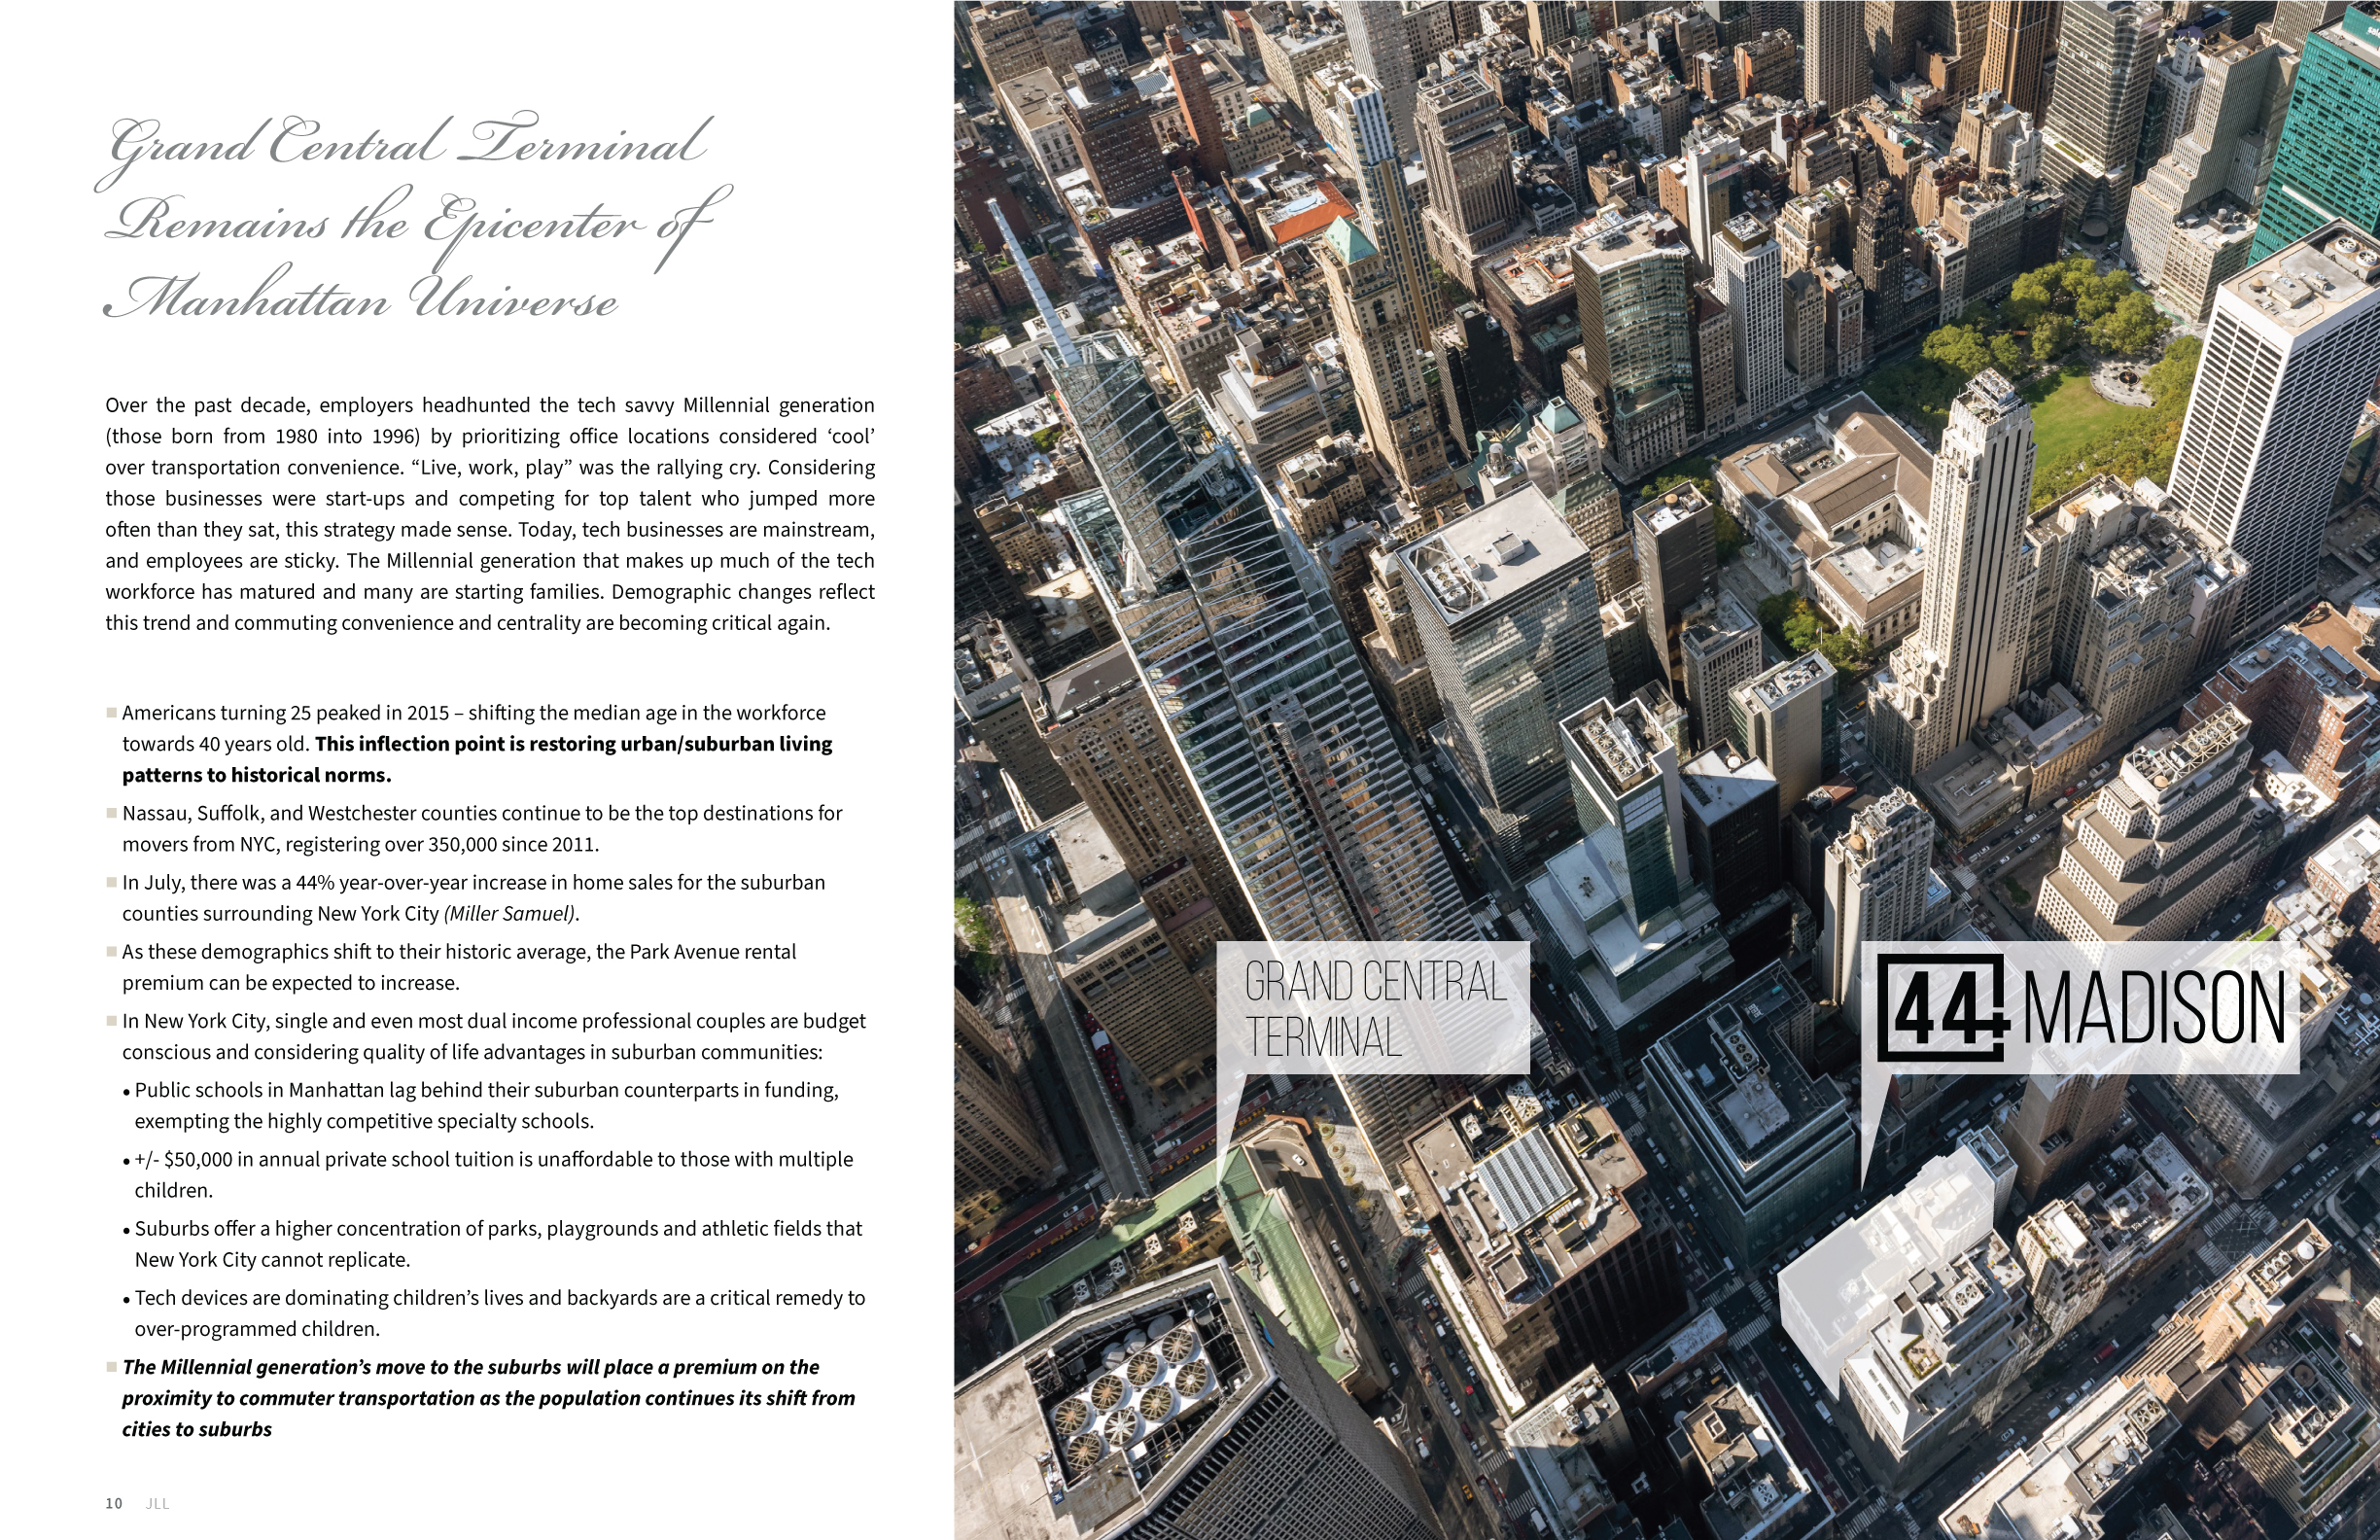 JLL / HFF, 44 + Mad, Madison Avenue, New York, OM, offering memorandum, select page spread